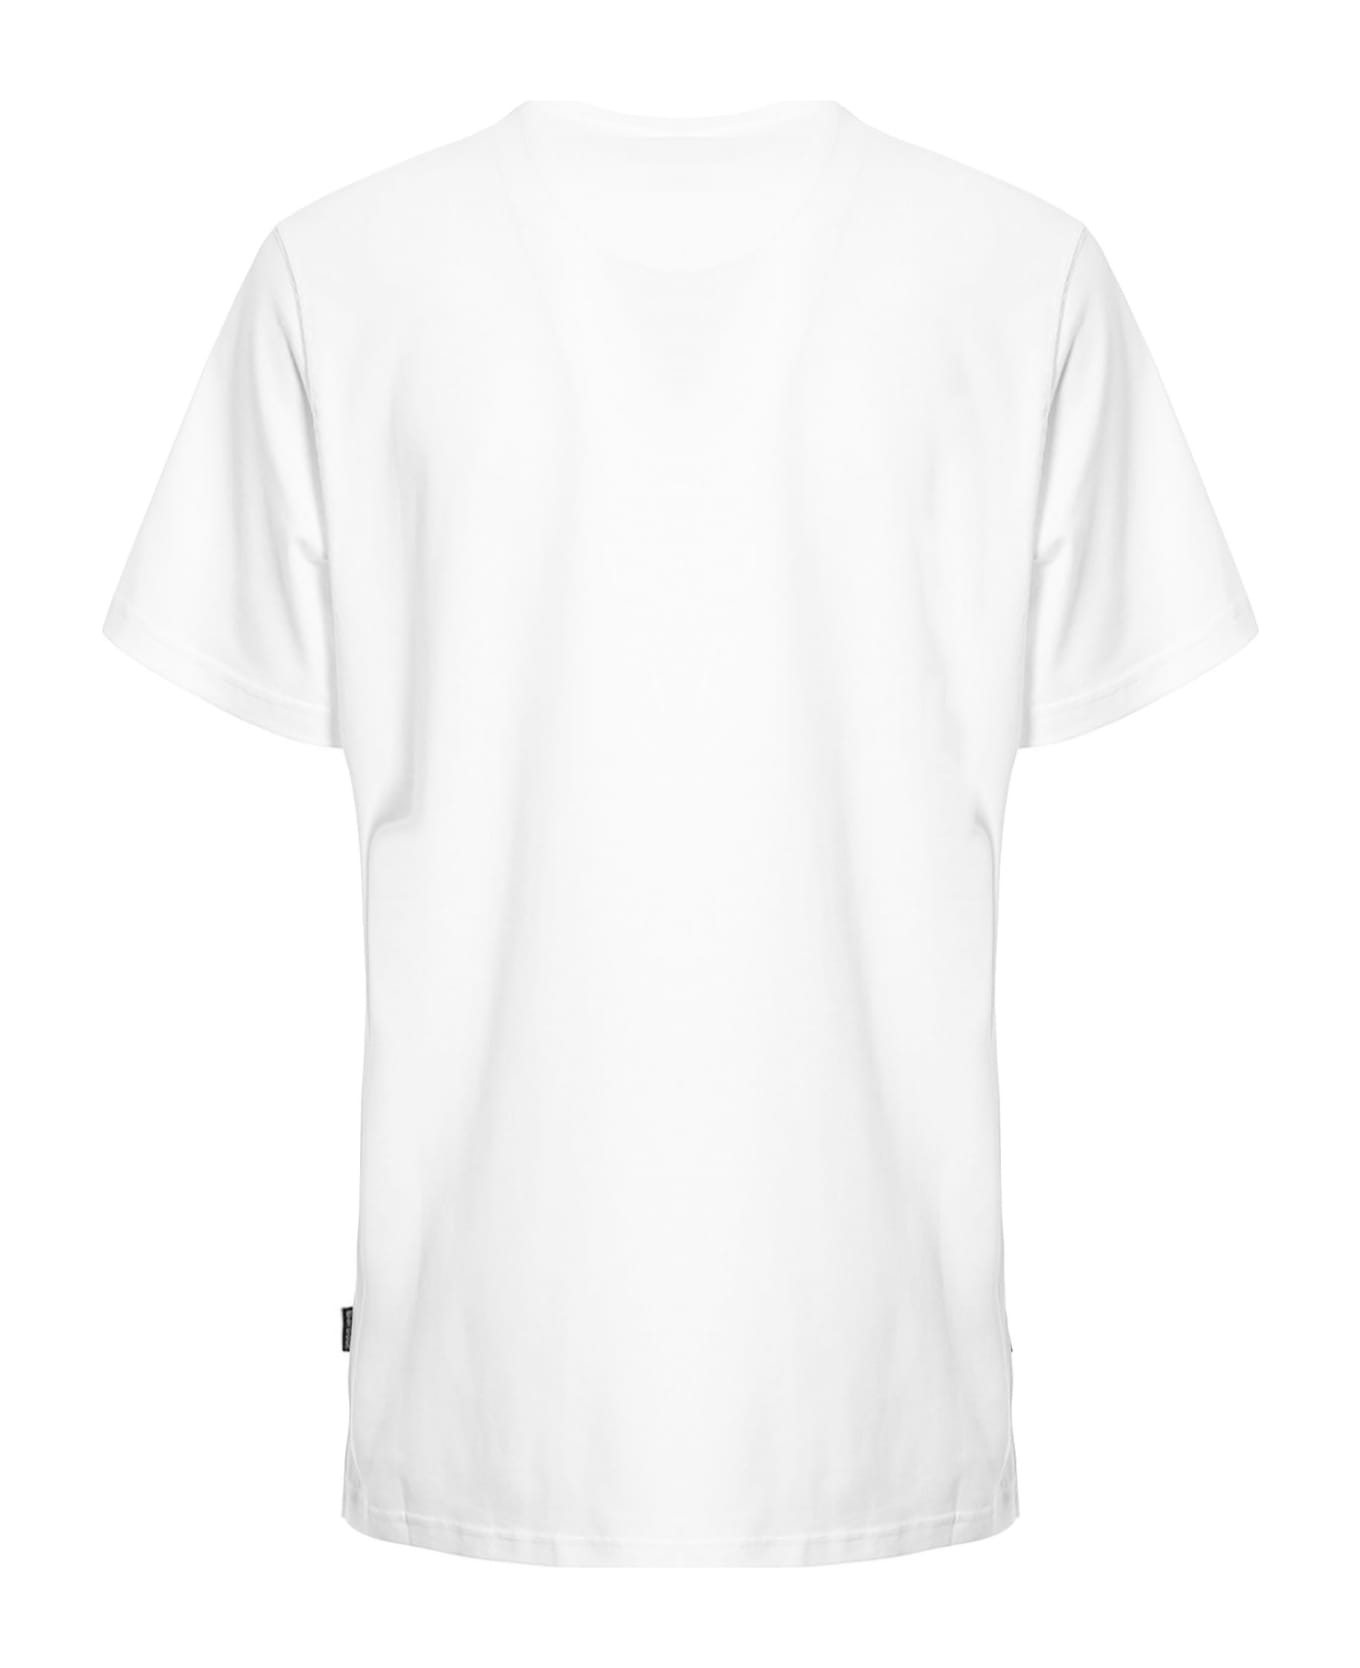 Barbour White Cotton T-shirt - White シャツ